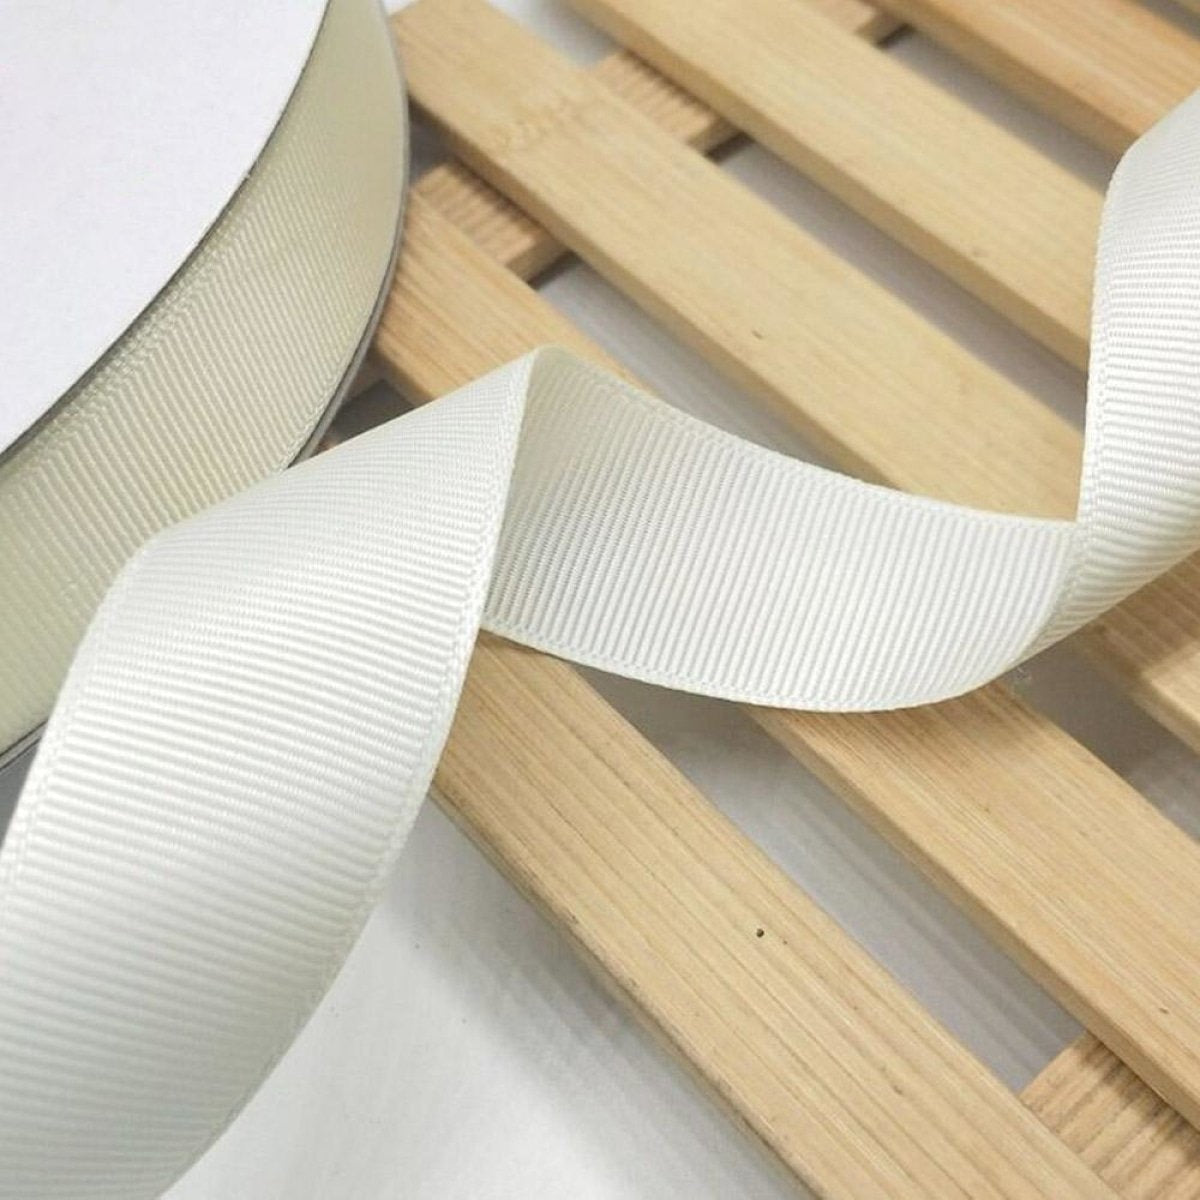 5m 40mm Ribbon Grosgrain Off White Weddings Decorative Hair